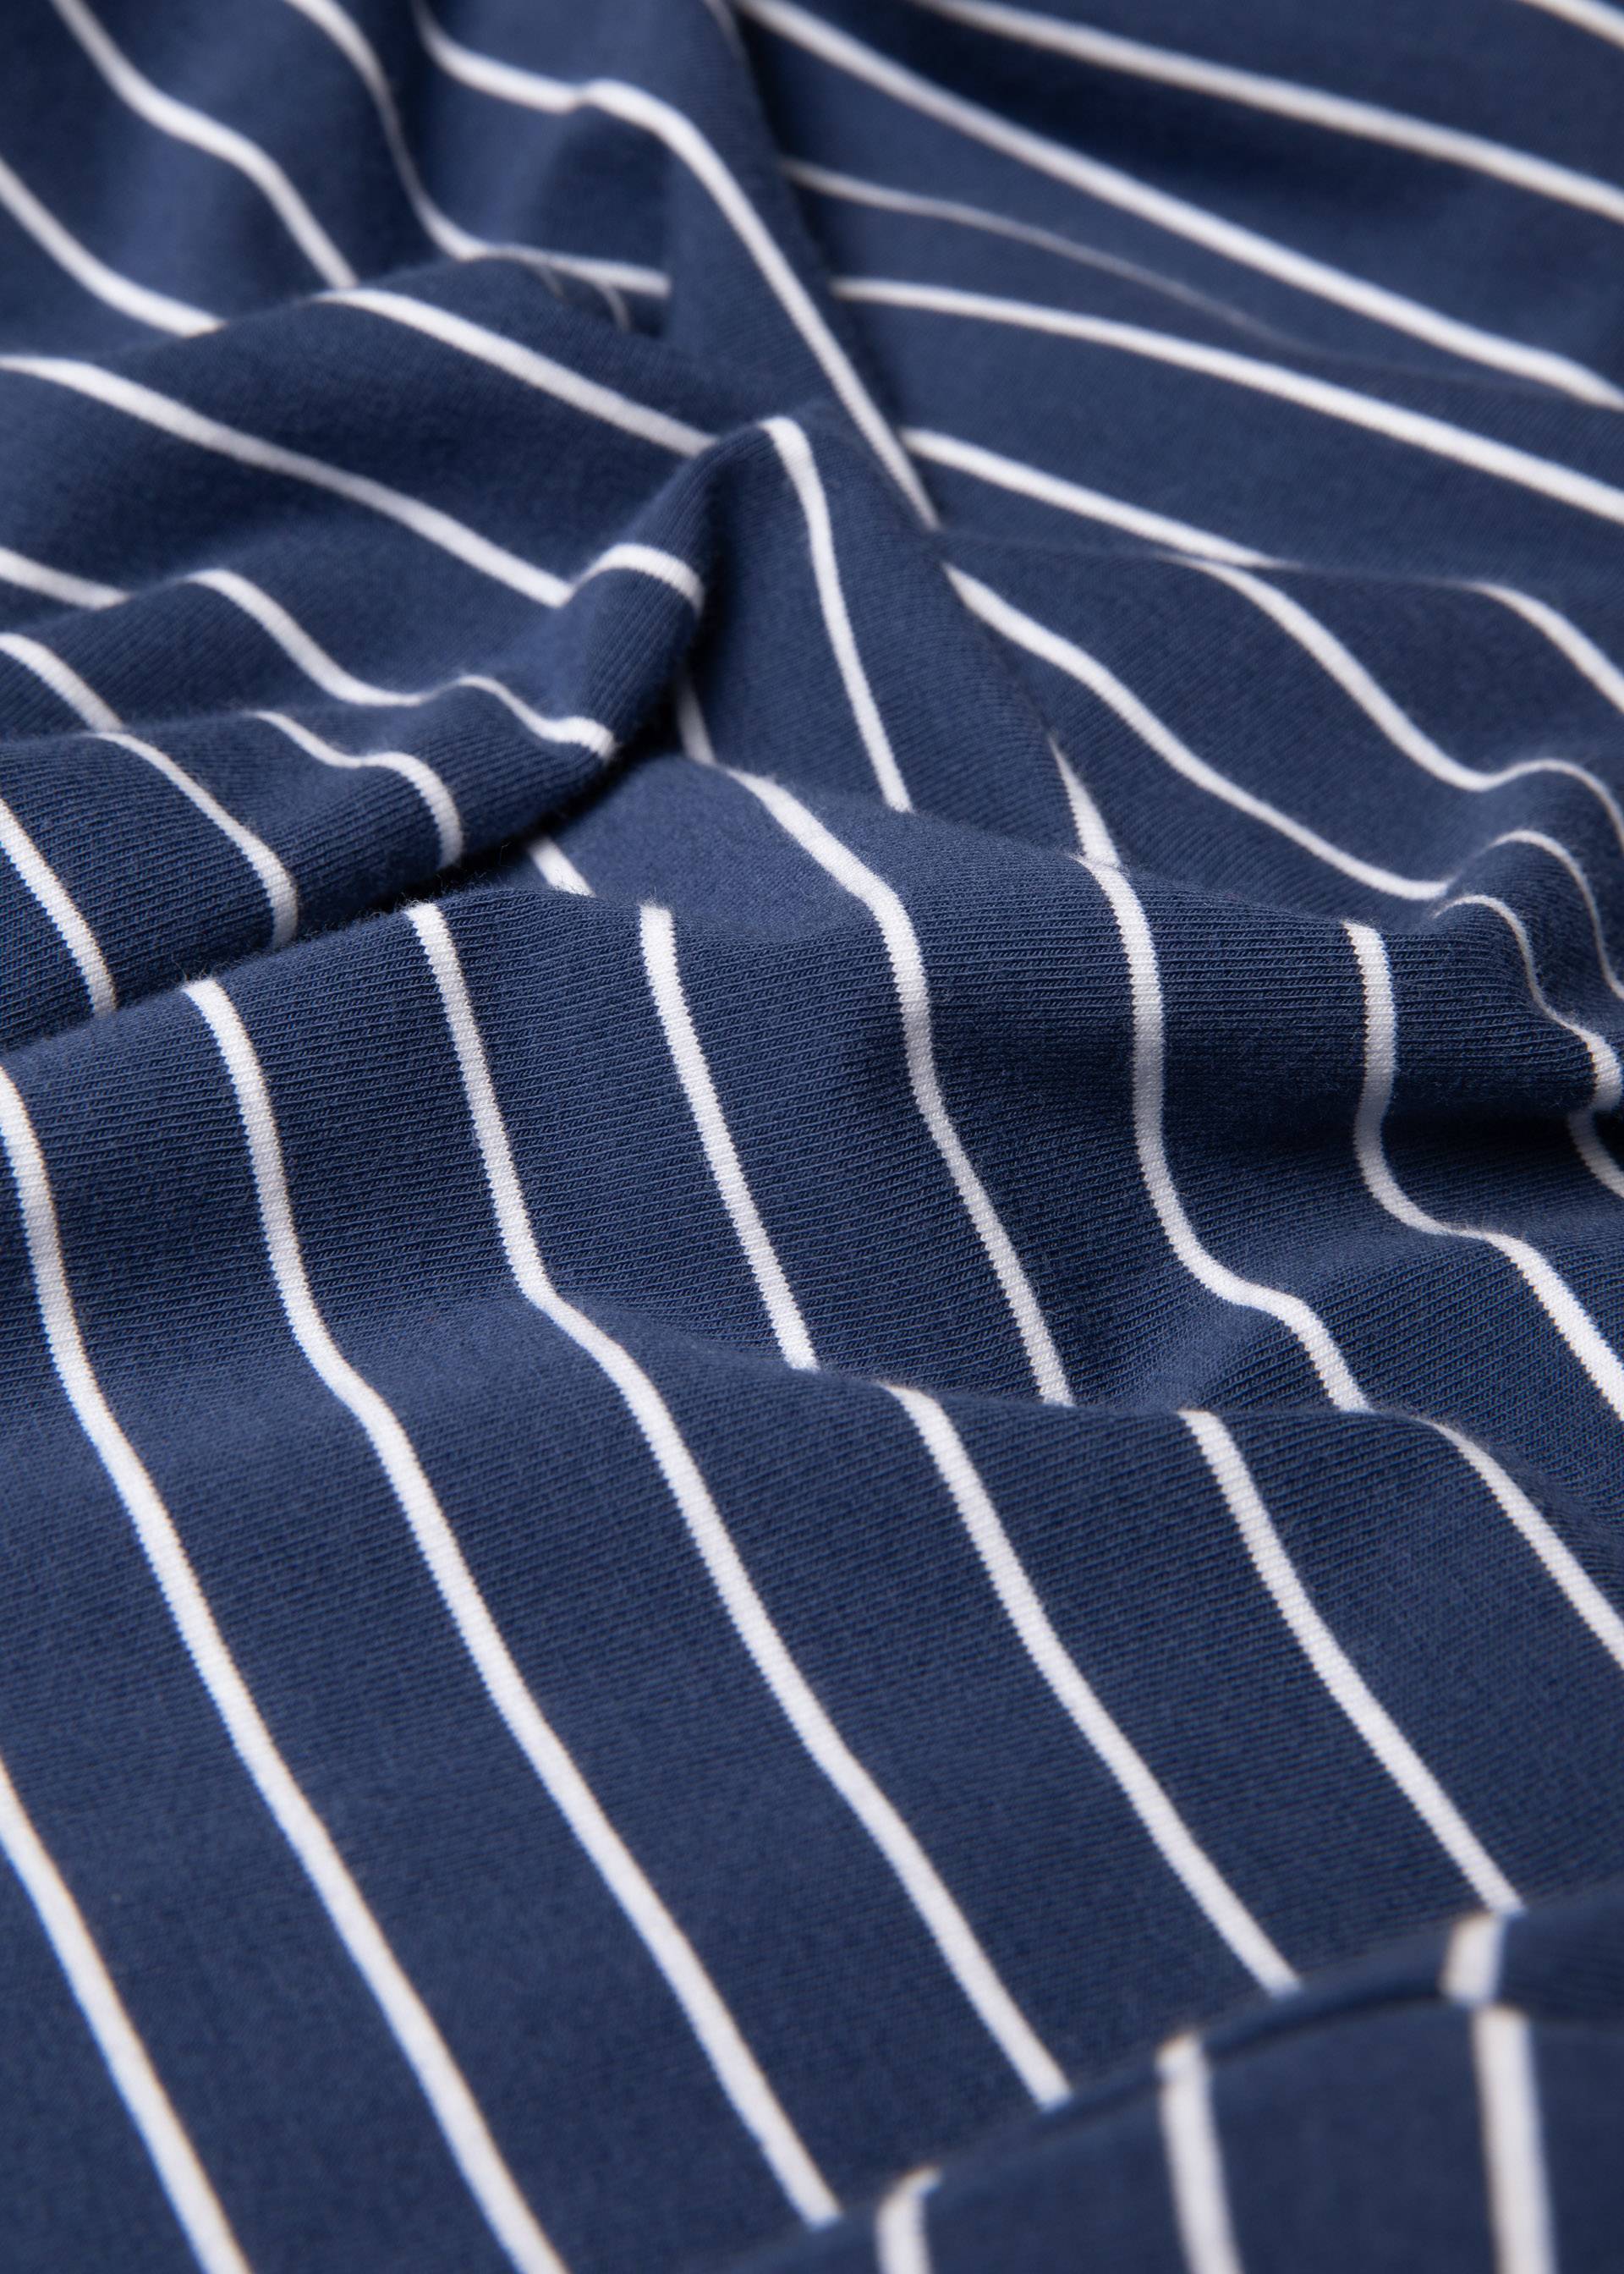 Breton shirt Let Romance  Rule, romantic feelings stripes, Tops, Blue